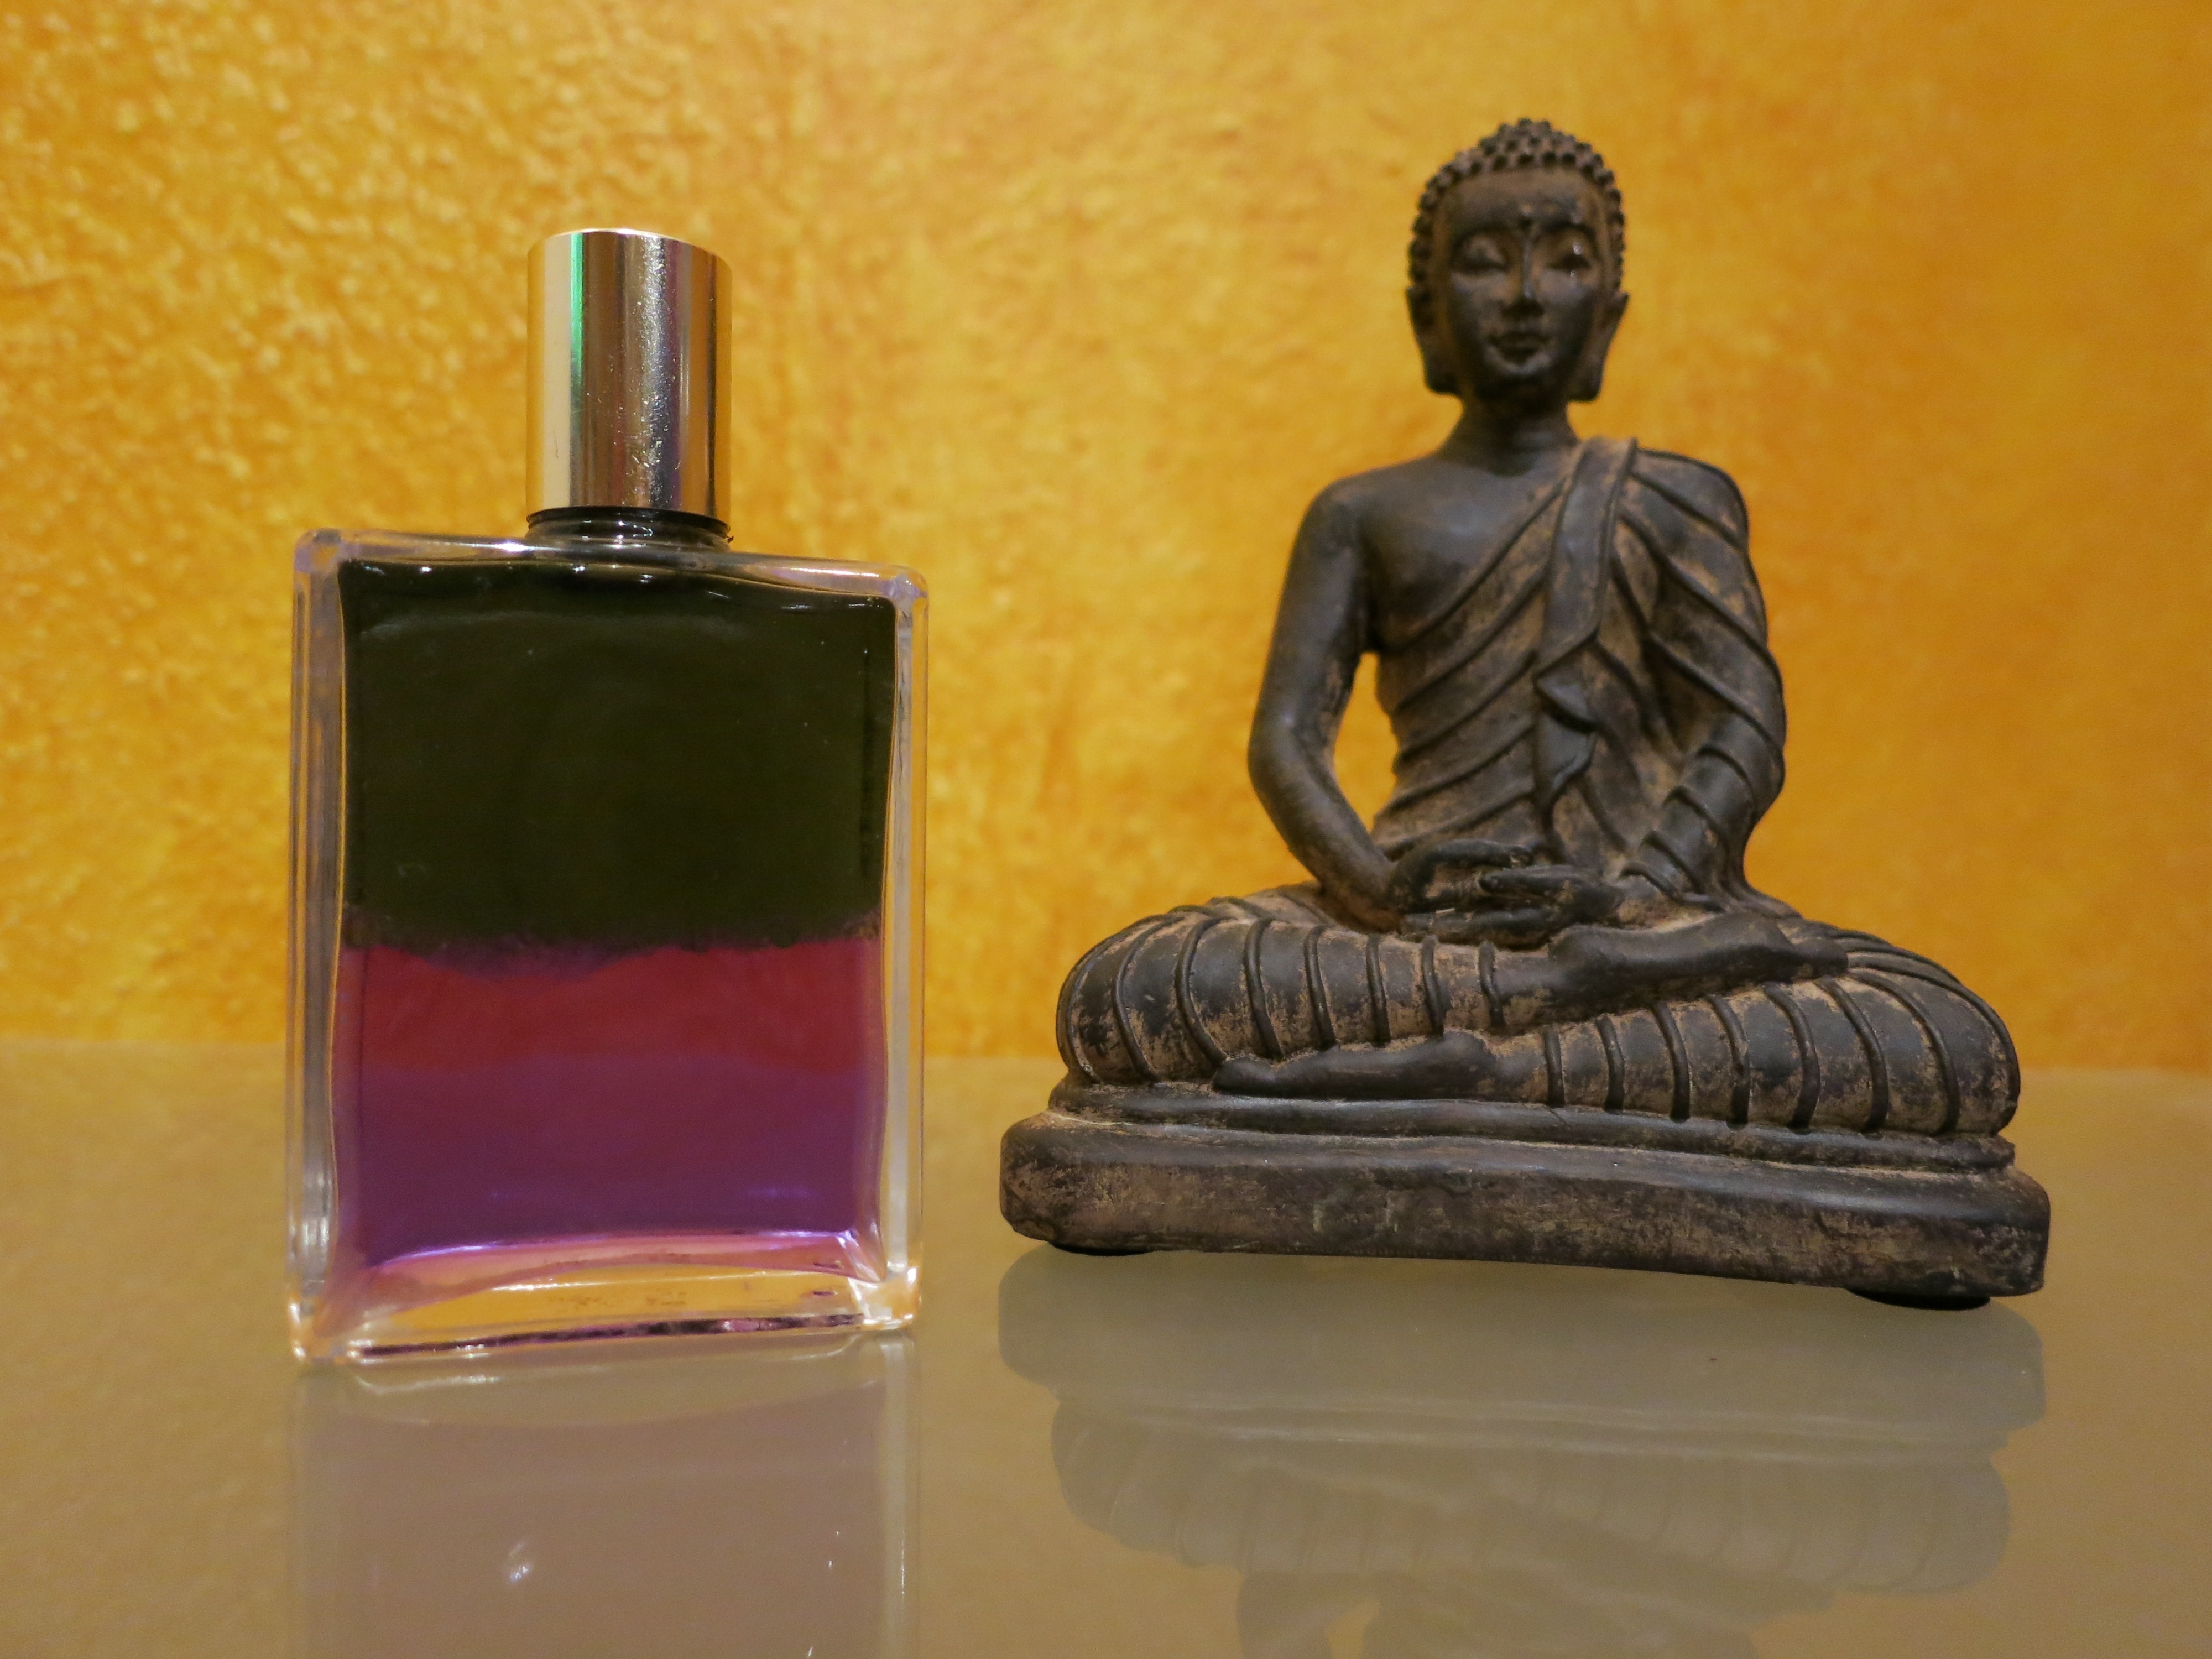 hindu deity figurine and glass spray bottle